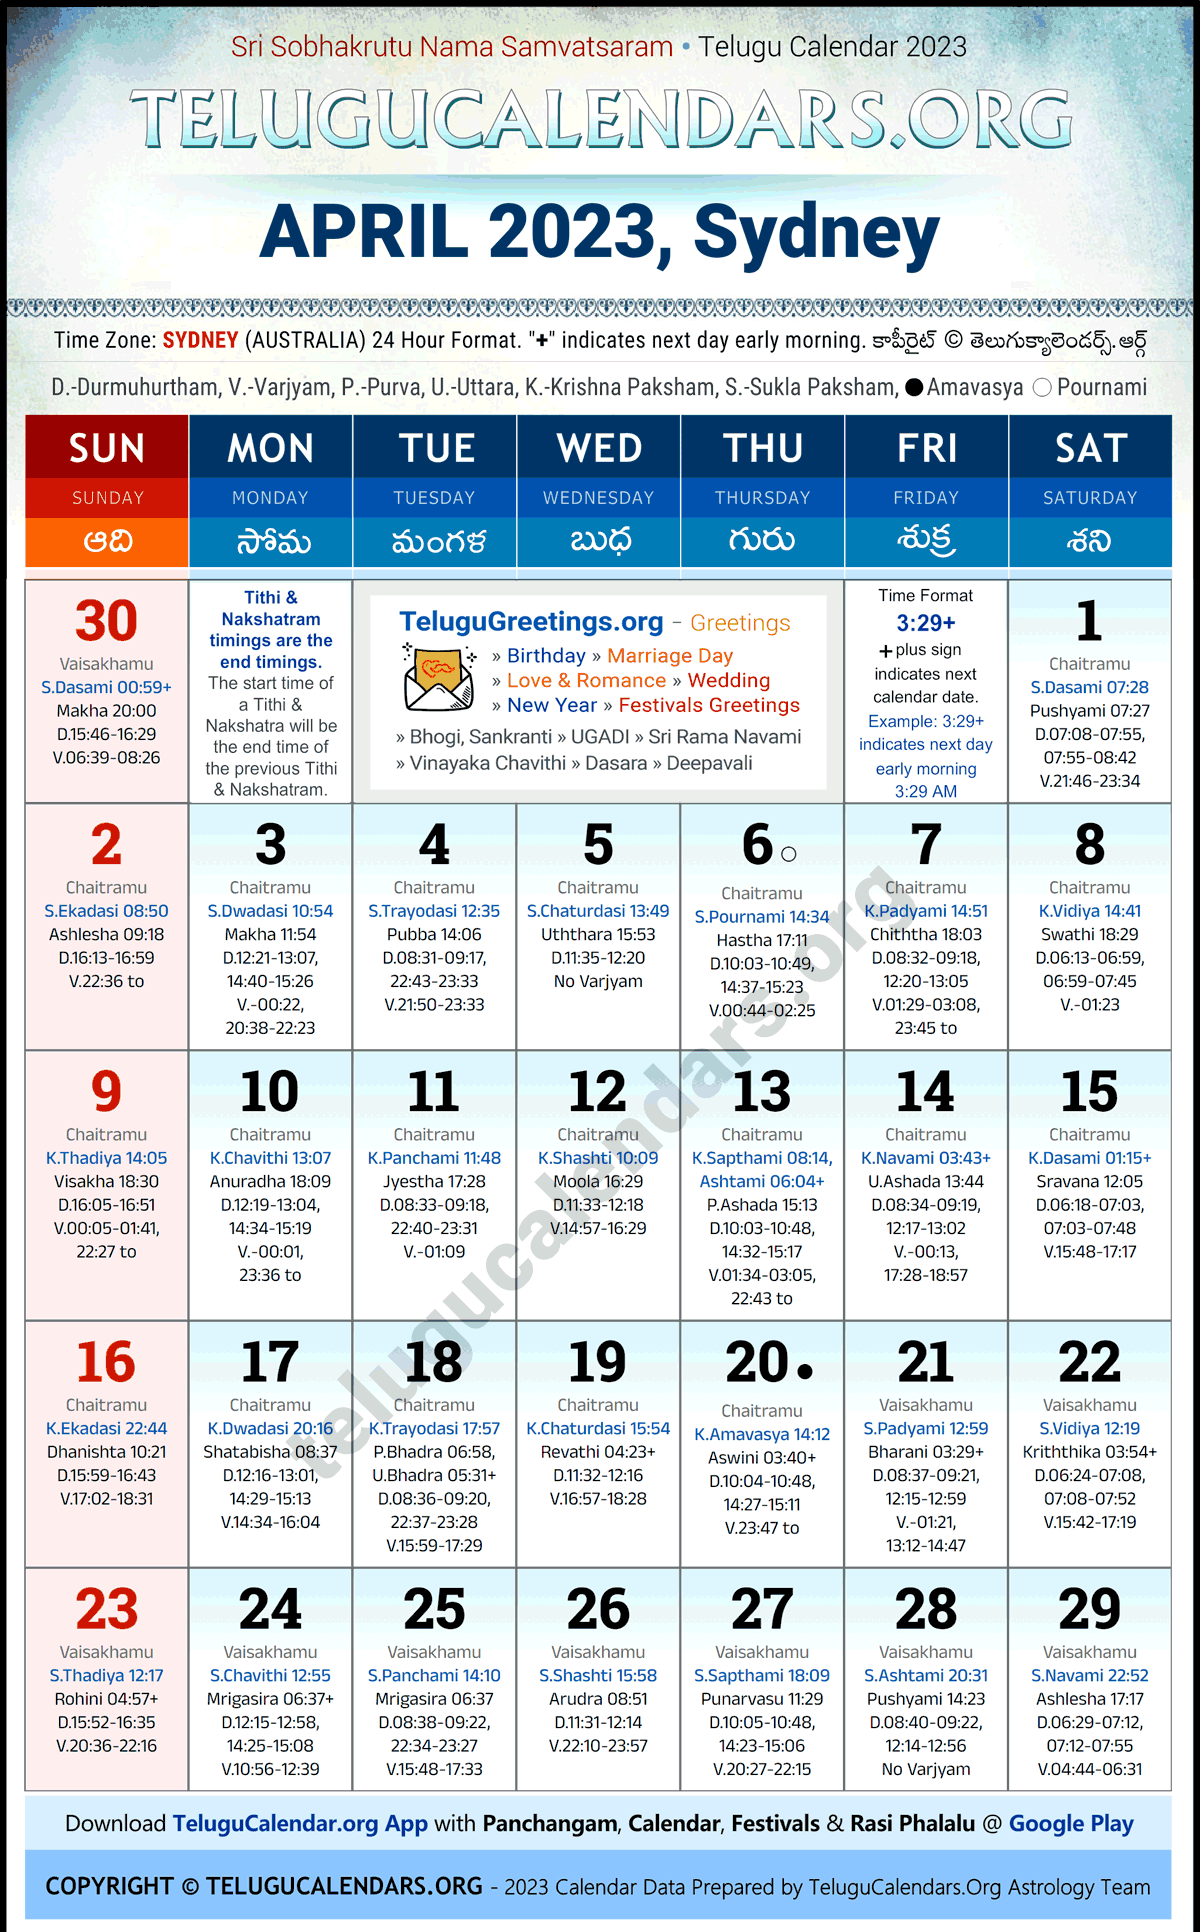 Telugu Calendar 2023 April Festivals for Sydney